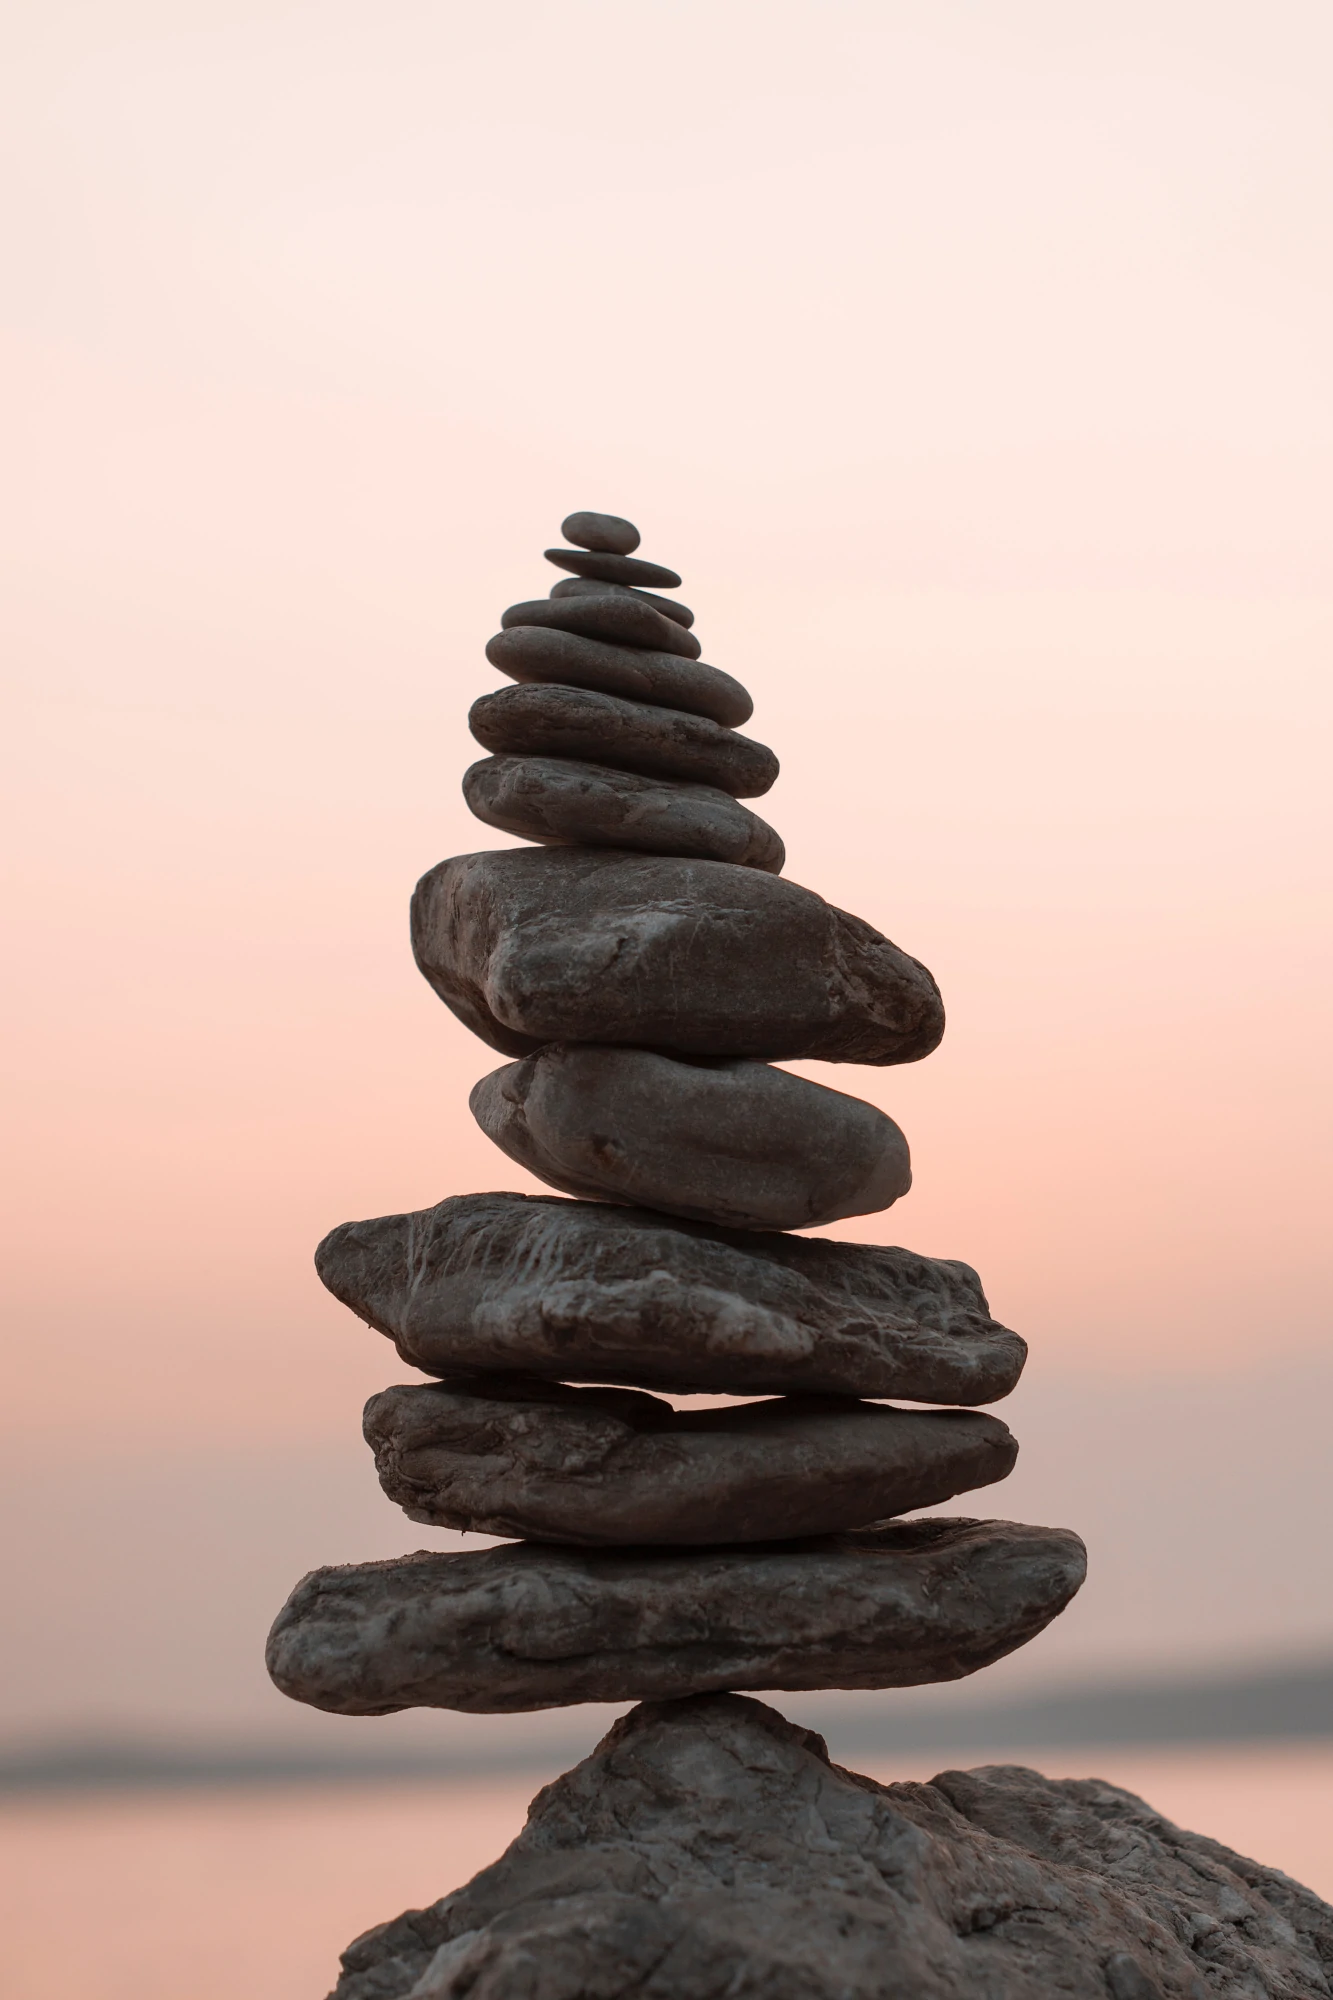 A stack of stones balancing